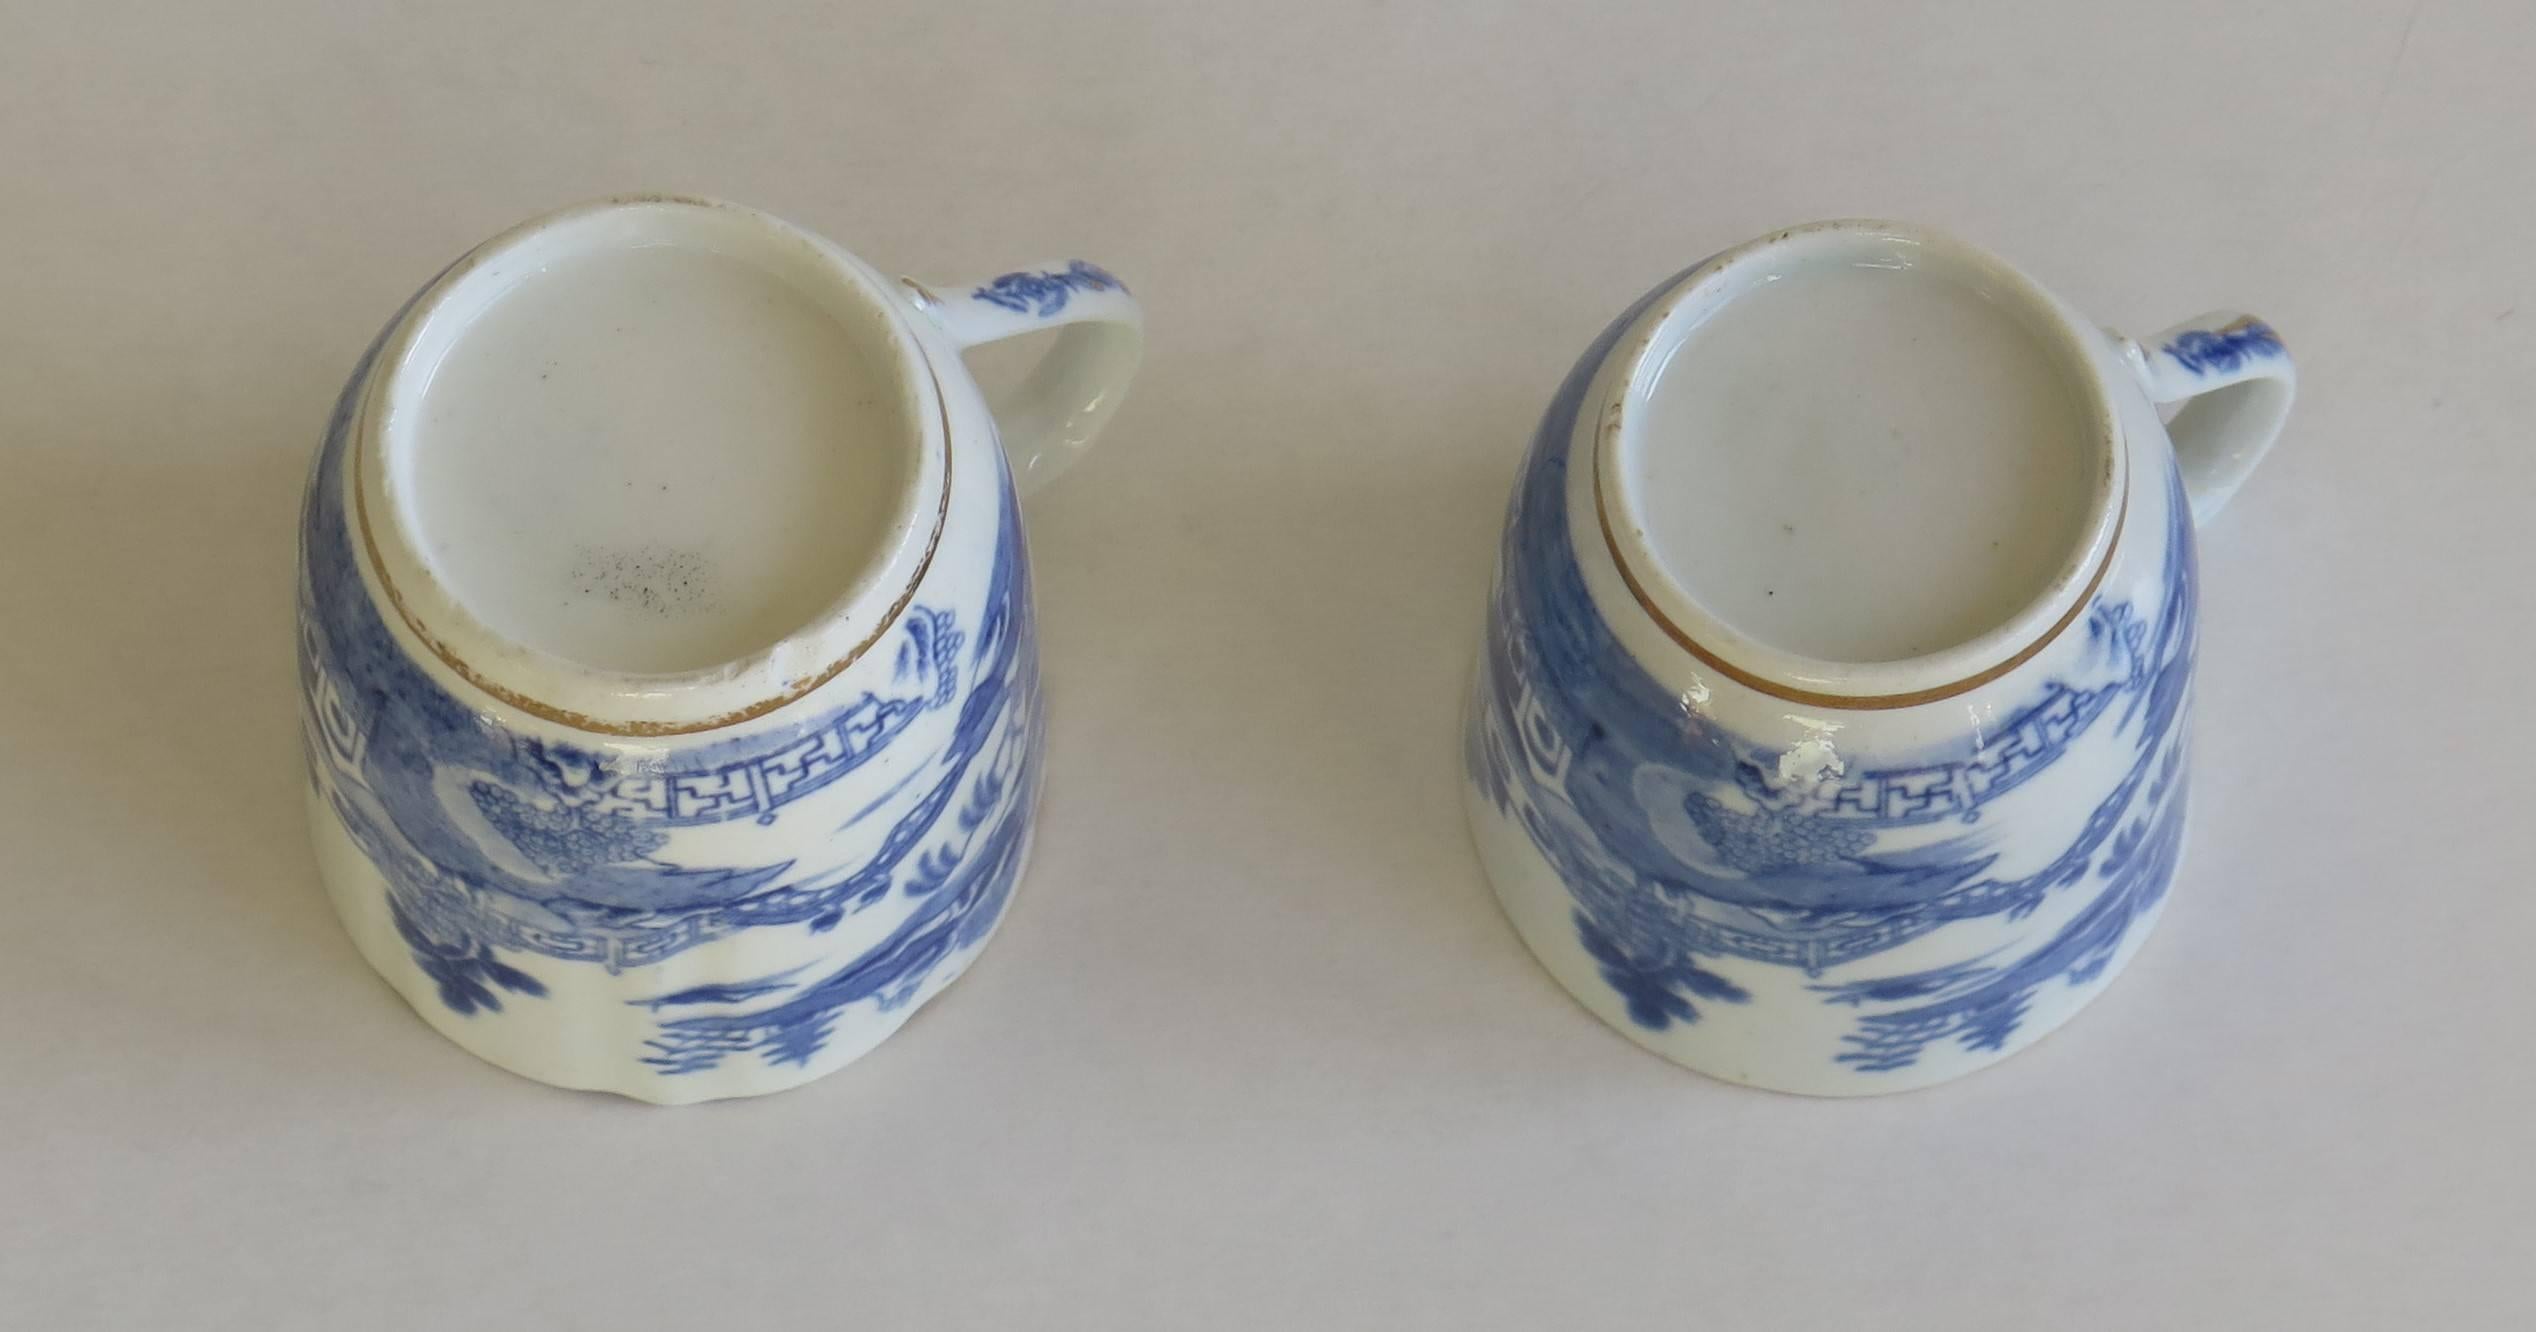 Similar PAIR of Miles Mason's Coffee Cans, Porcelain, Pagoda Pattern, circa 1800 3